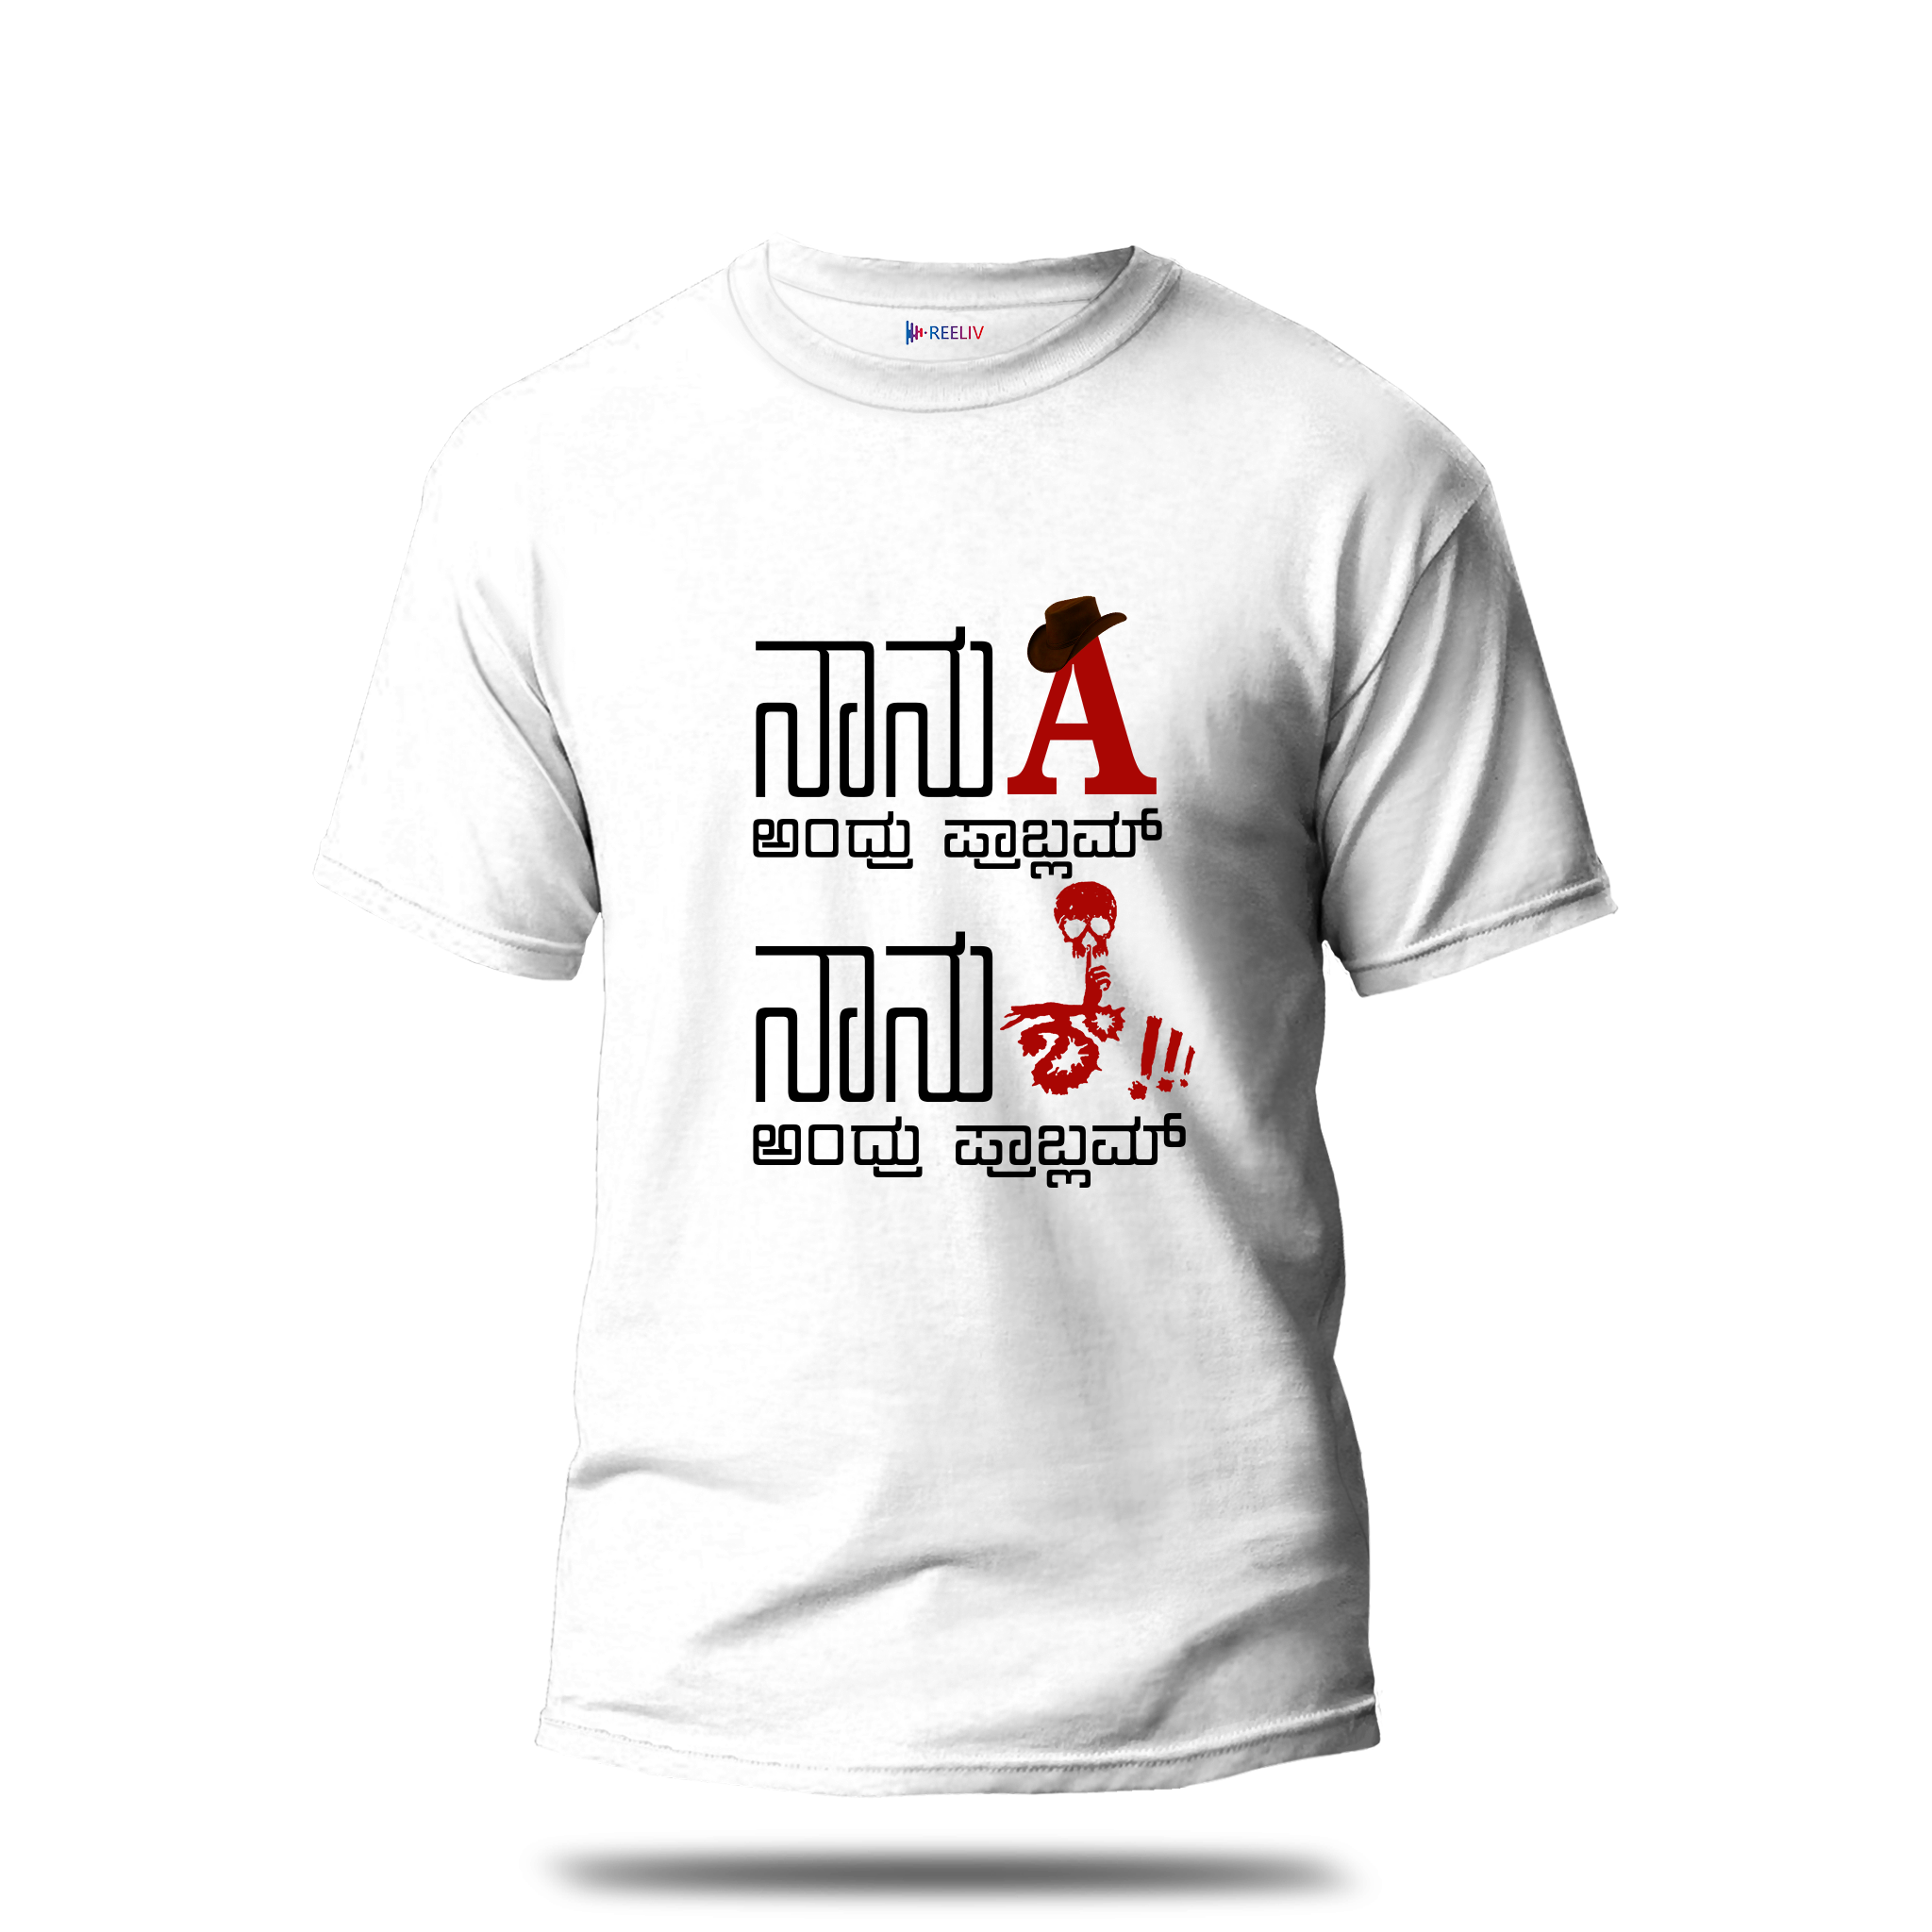 Bio wash t-shirt- Naanu A andru Problem